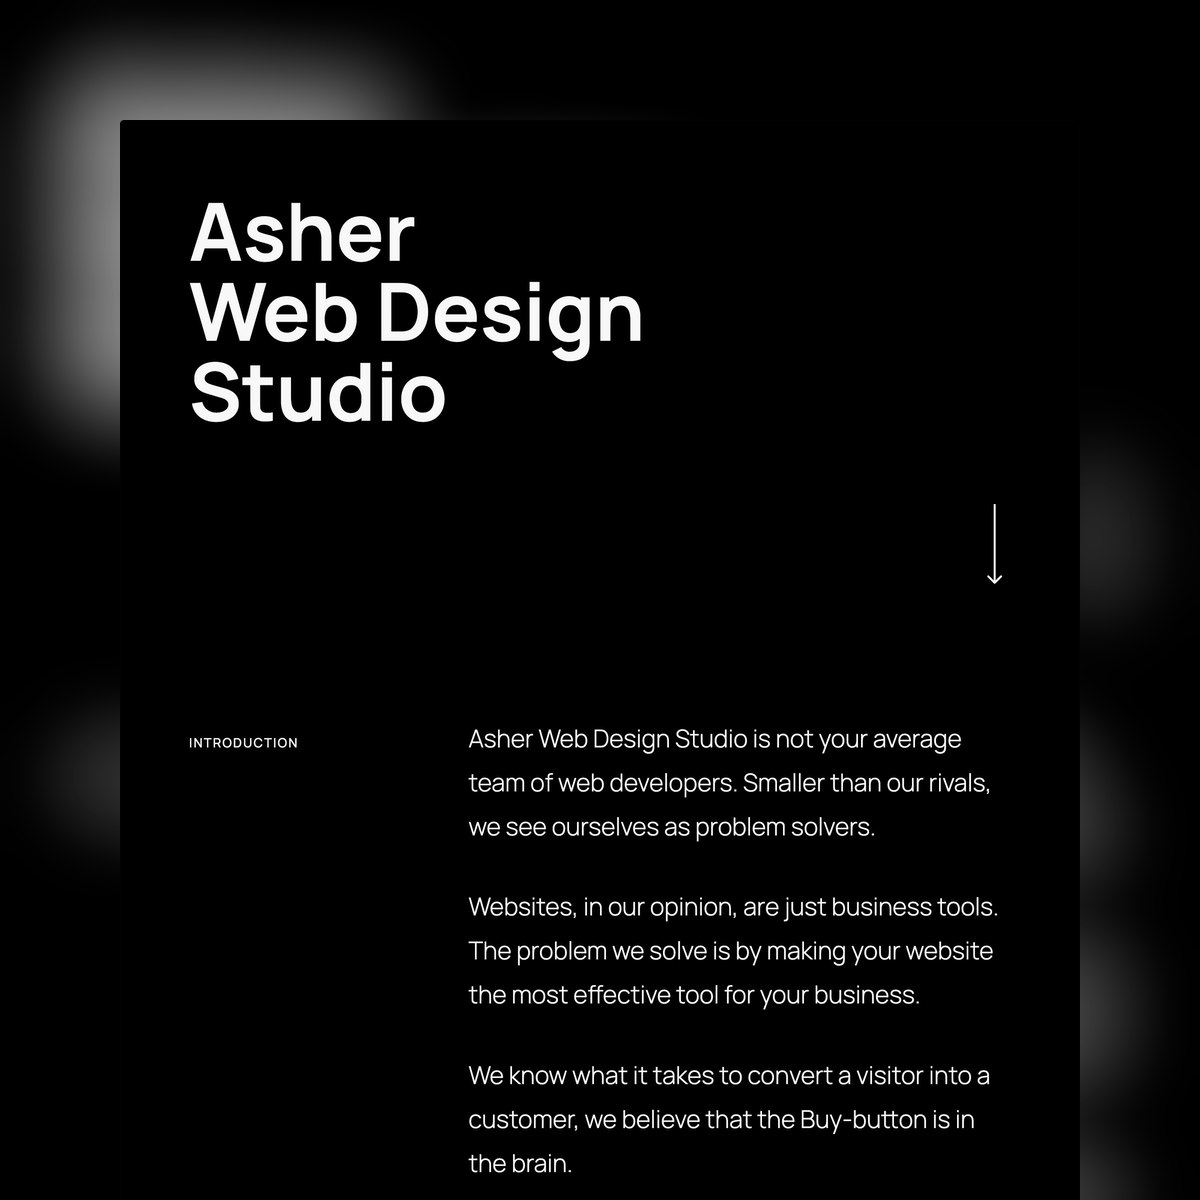 Contact Page screen design idea #71: Website Inspiration: Asher Web Design Studio